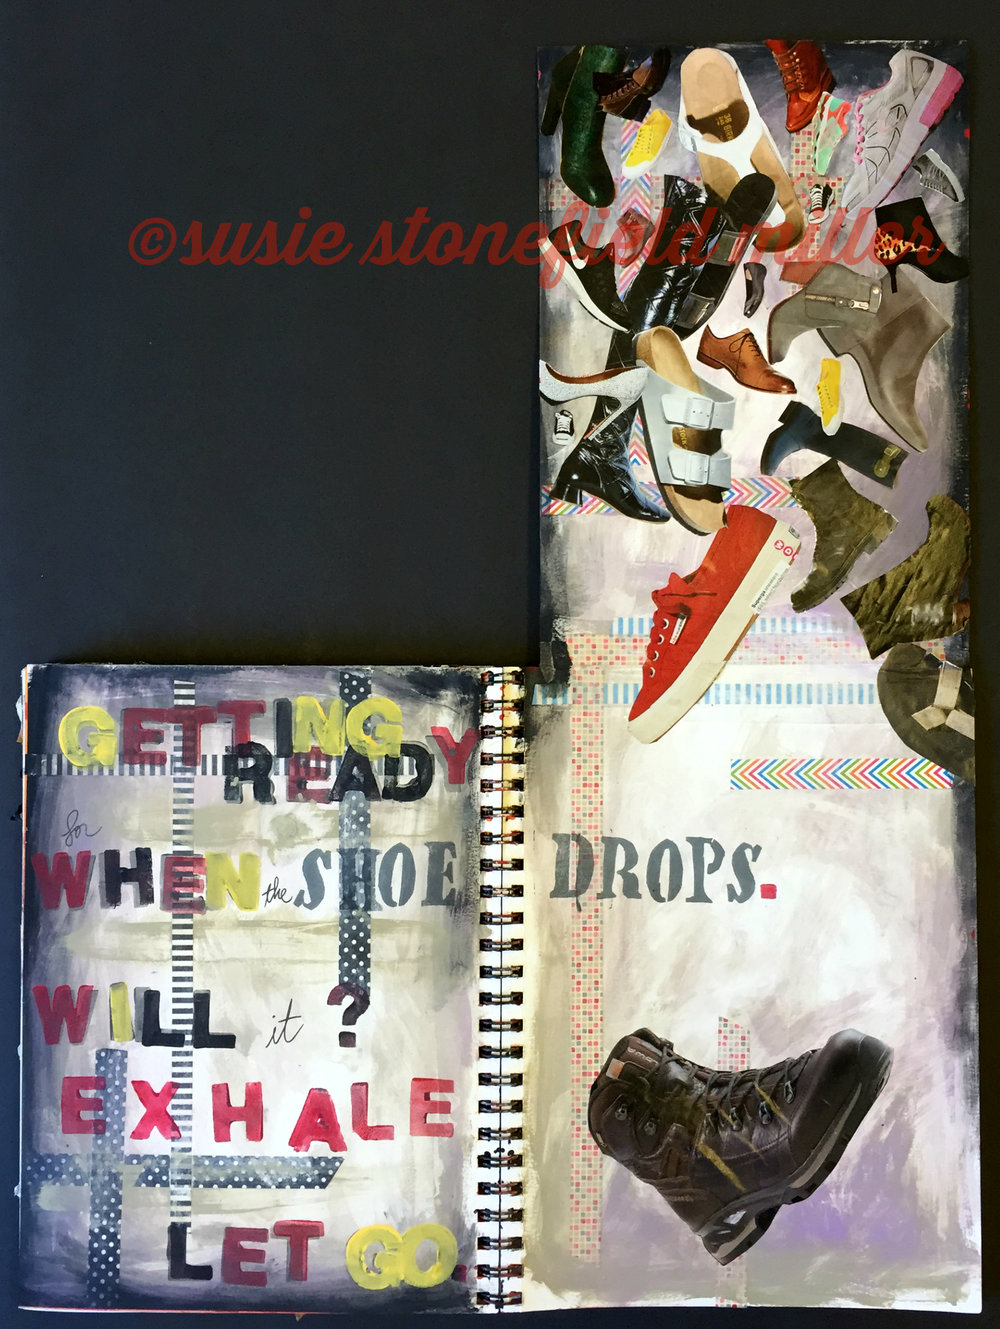 Travel Art Journaling: My Kit and My Process • Unfold Your Creative Spirit  Studio • Art Journaling • Susie Stonefield Miller